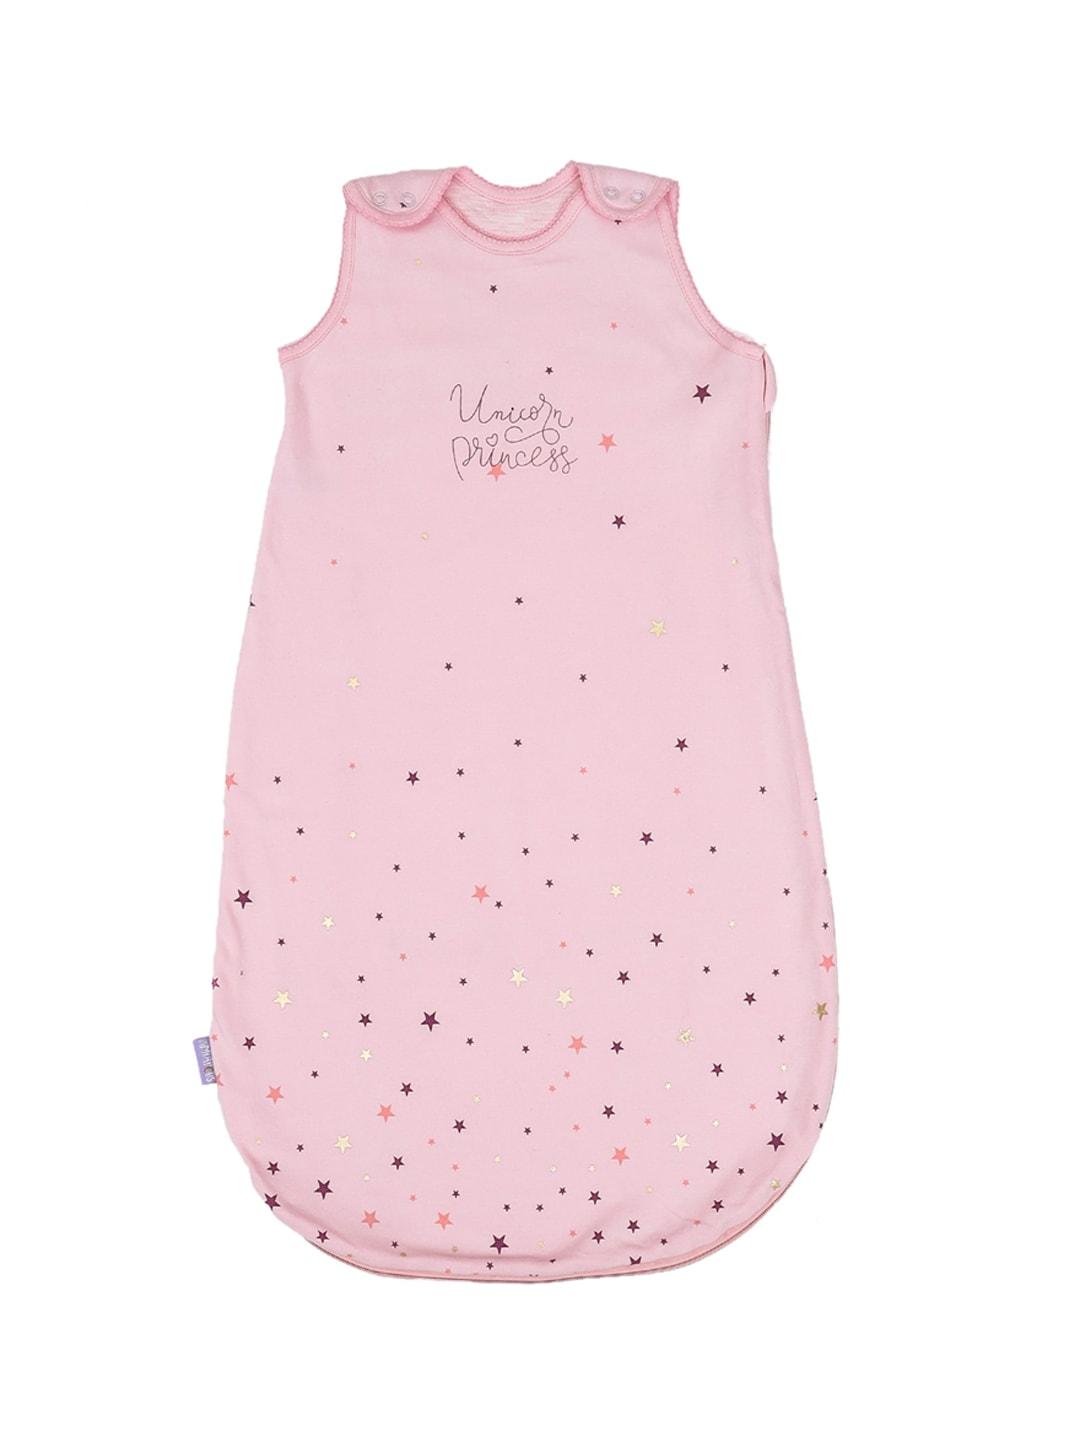 MiArcus Infants Pink Printed Pure Cotton Sleeping Bag